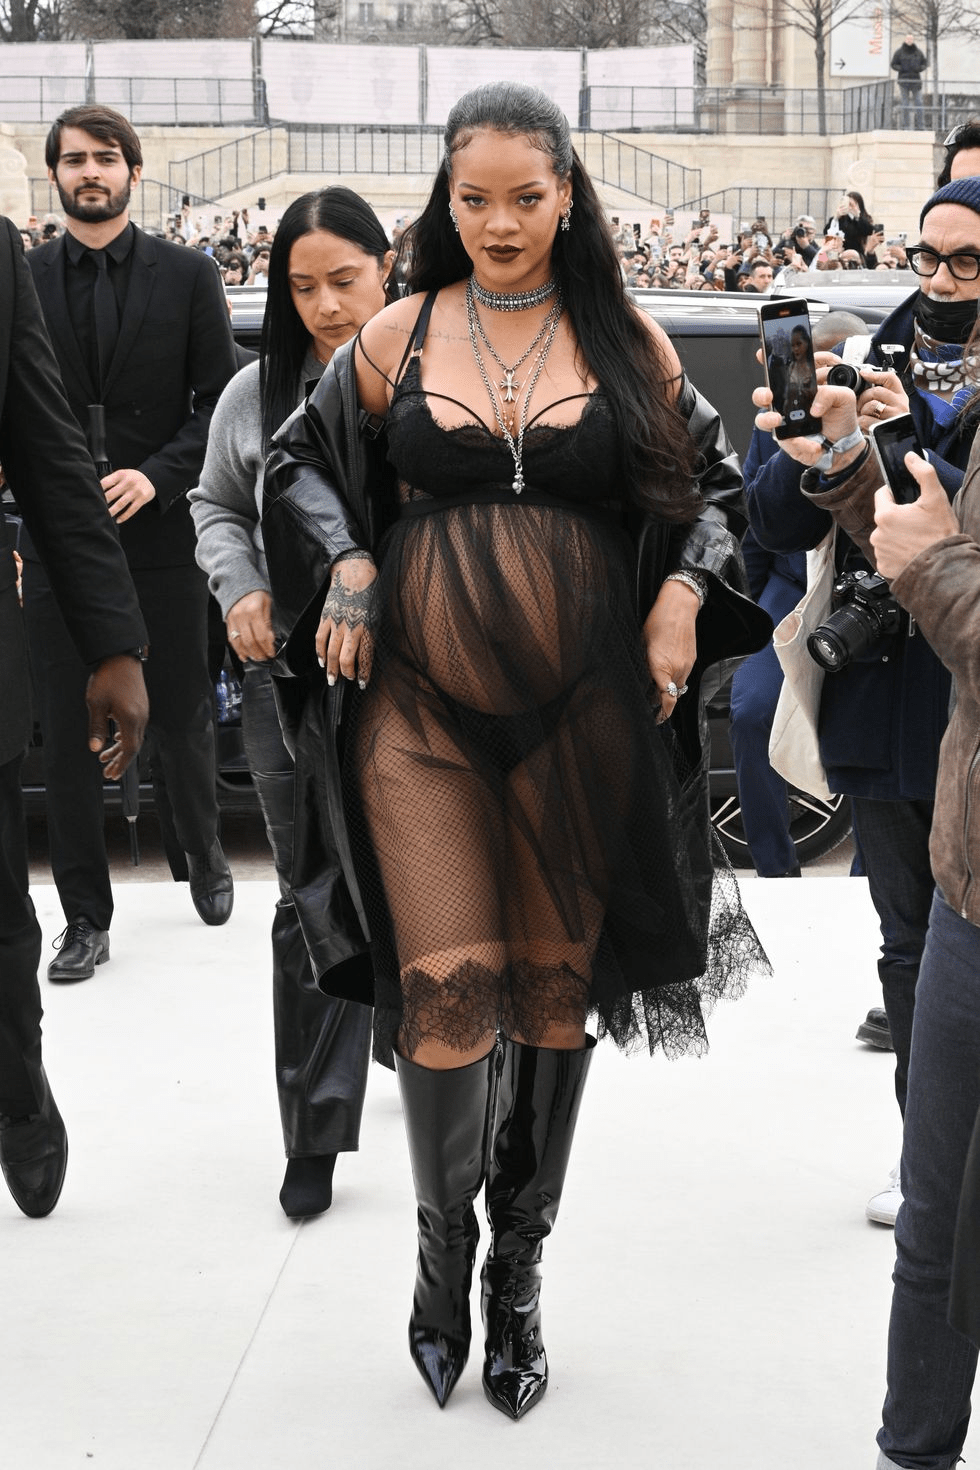 Rihanna wearing black see-through dress while pregnant